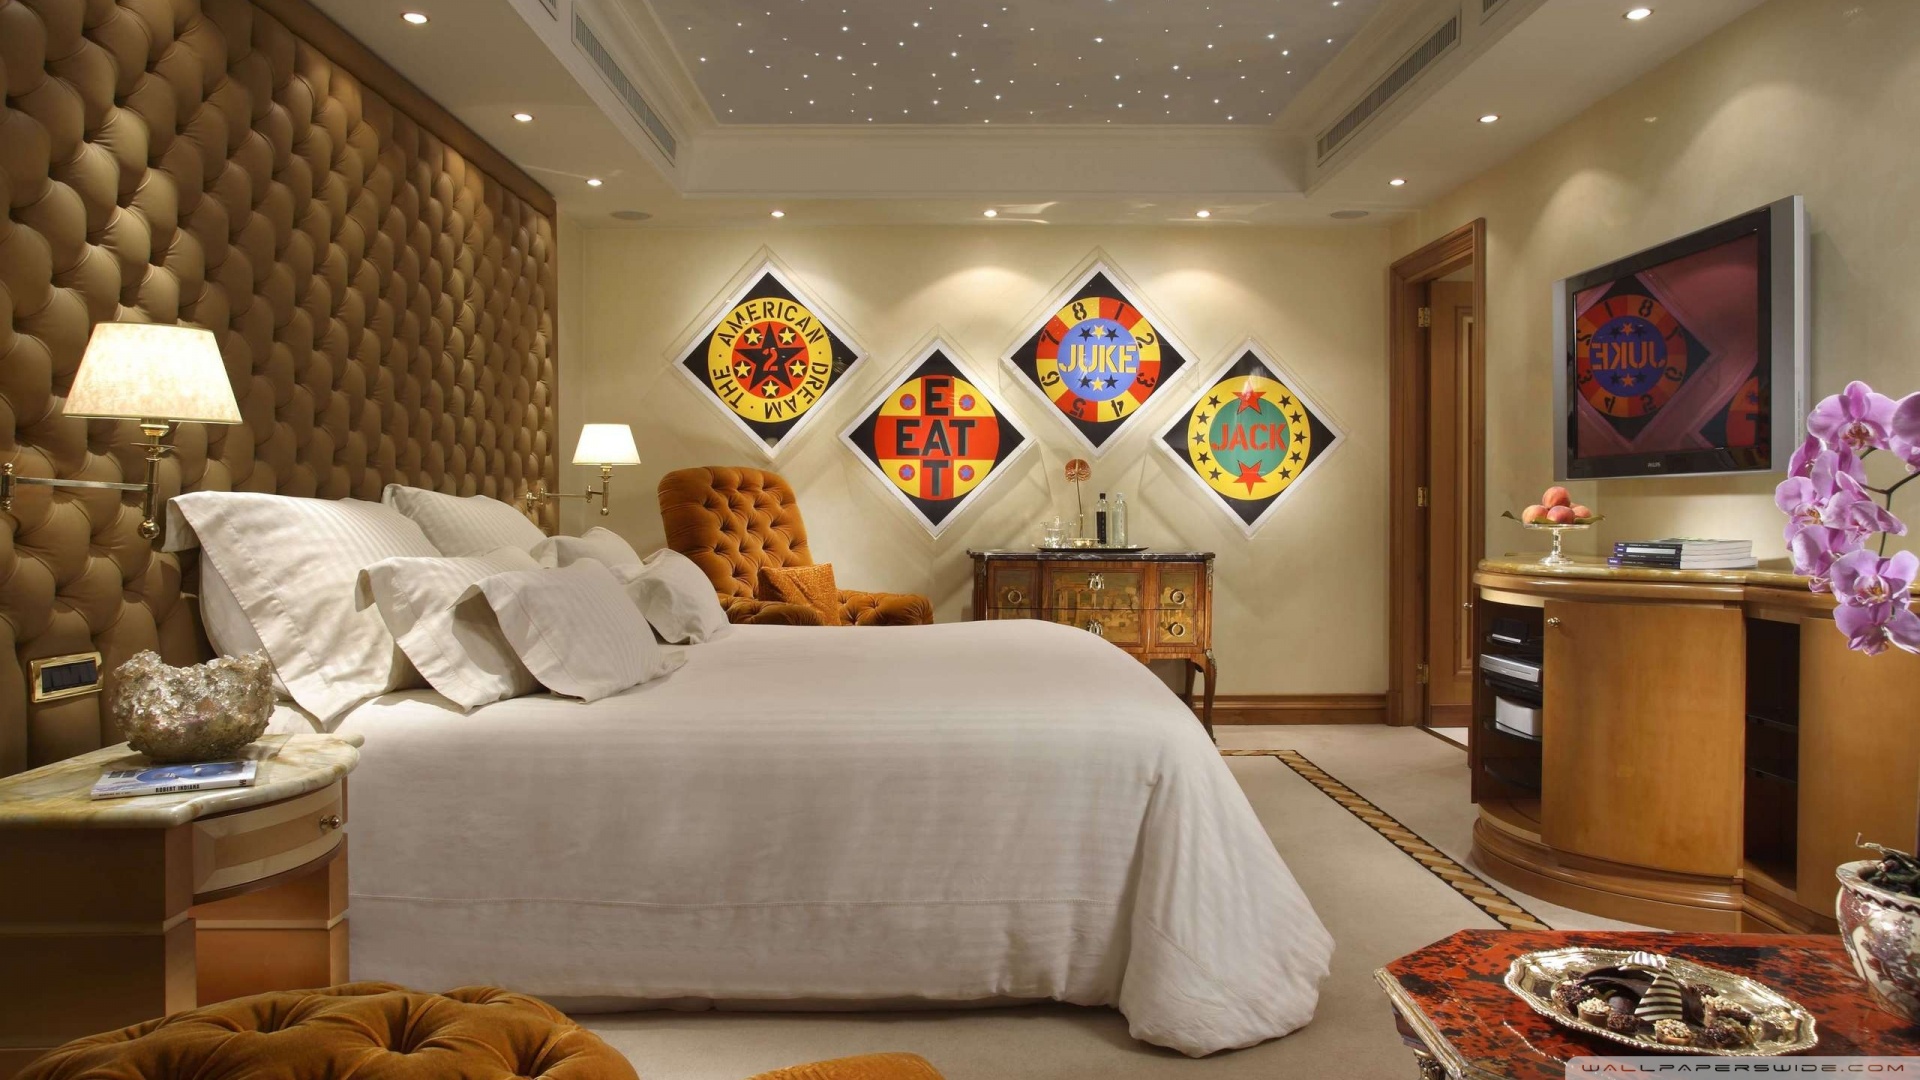 Luxury Bedroom Ultra Hd Desktop Background Wallpaper For 4k Uhd Tv Tablet Smartphone